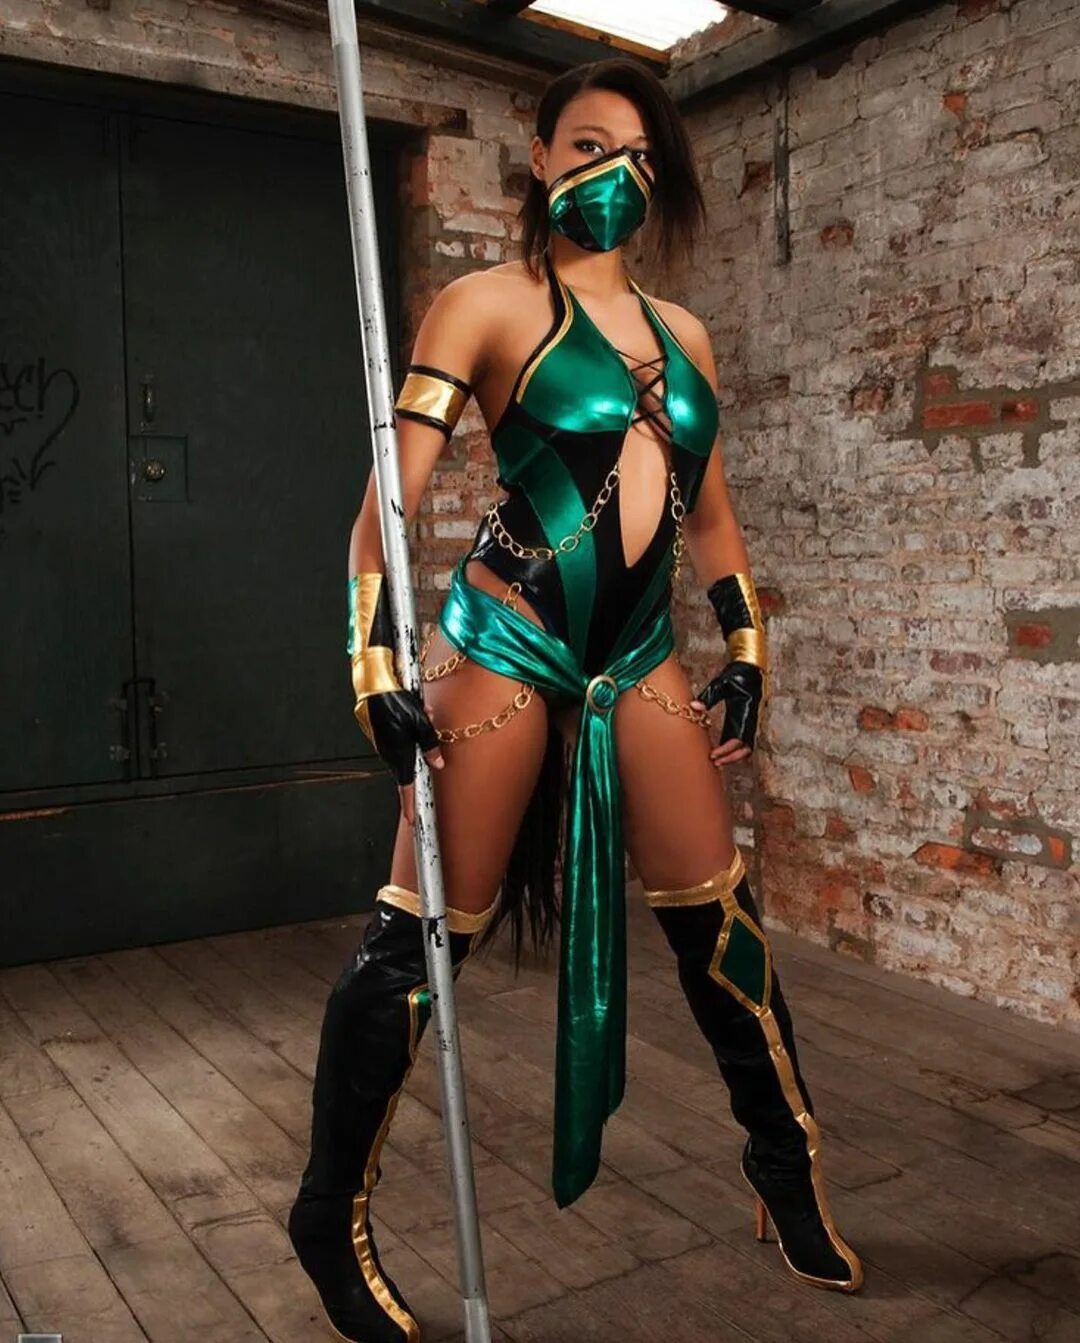 Instagram: “Cosplay Beauty @zazie.cosplay looks killer in this sexy Jade co...